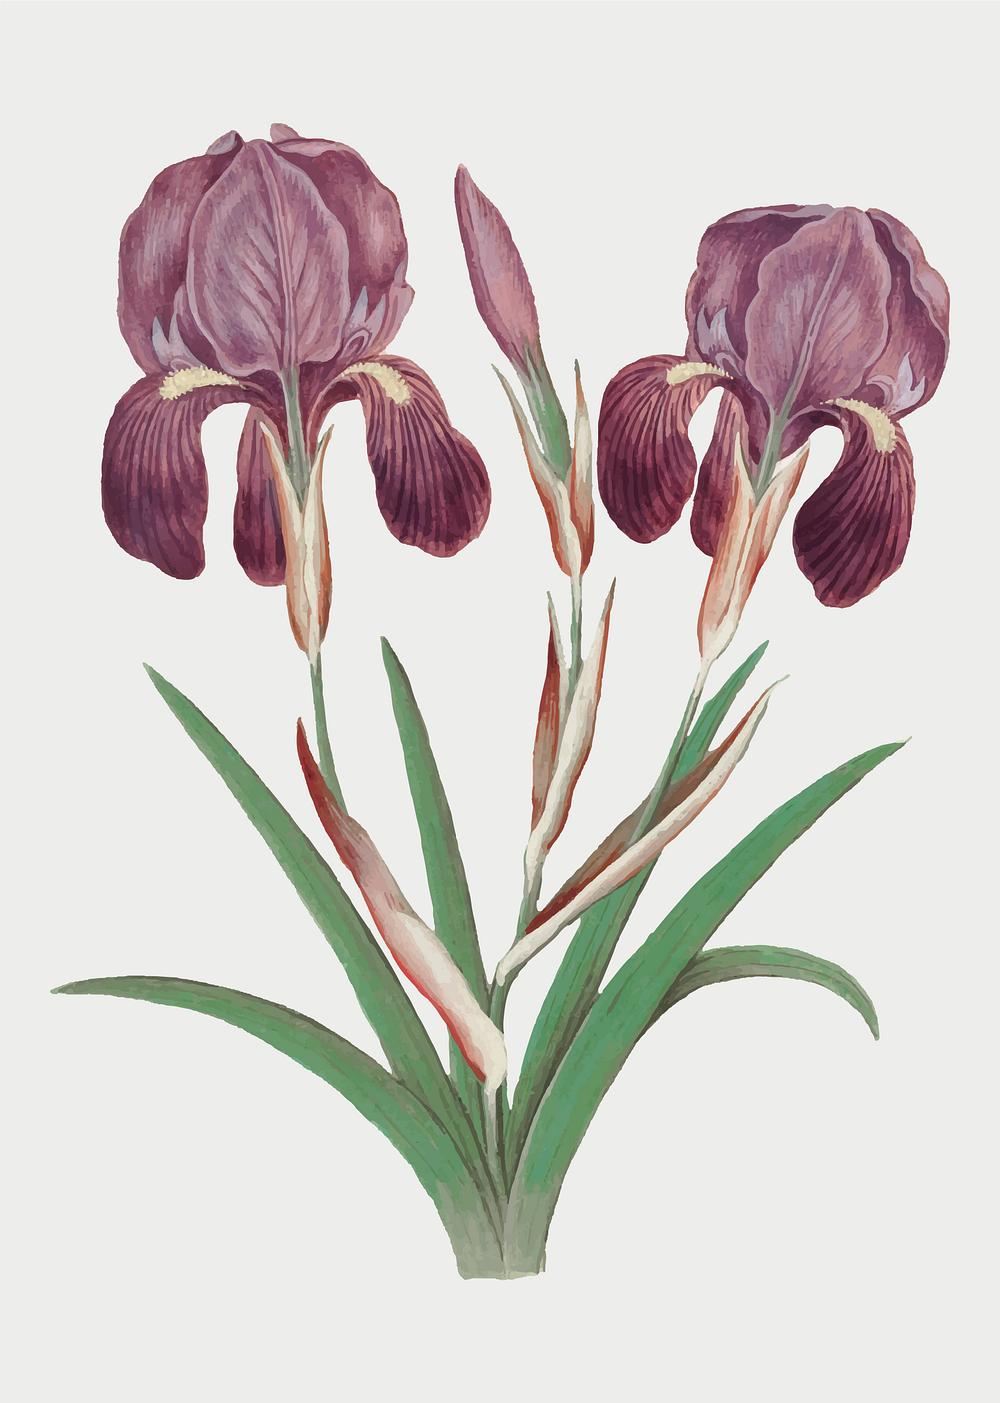 Purple iris in vintage style | Royalty free stock illustration - 561532